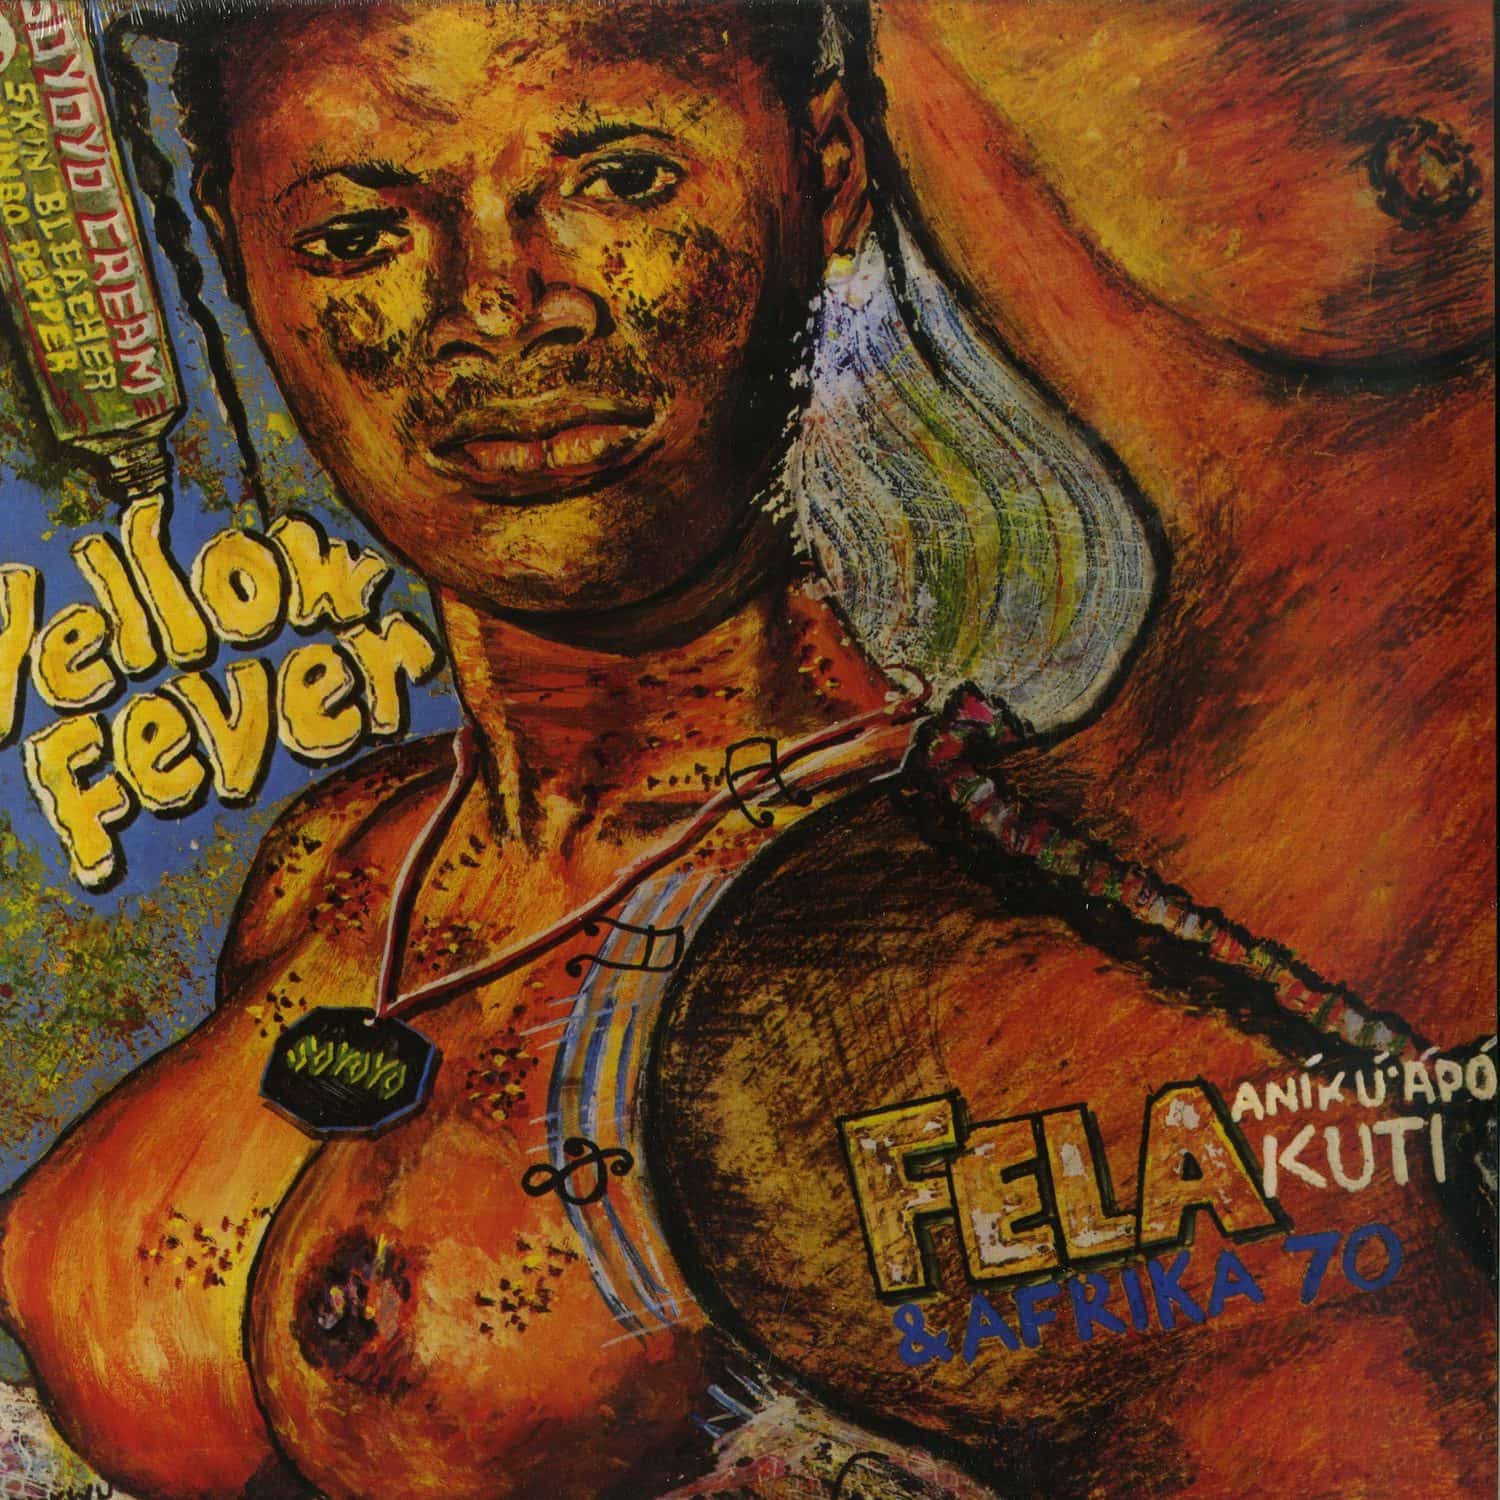 Fela Kuti - YELLOW FEVER 